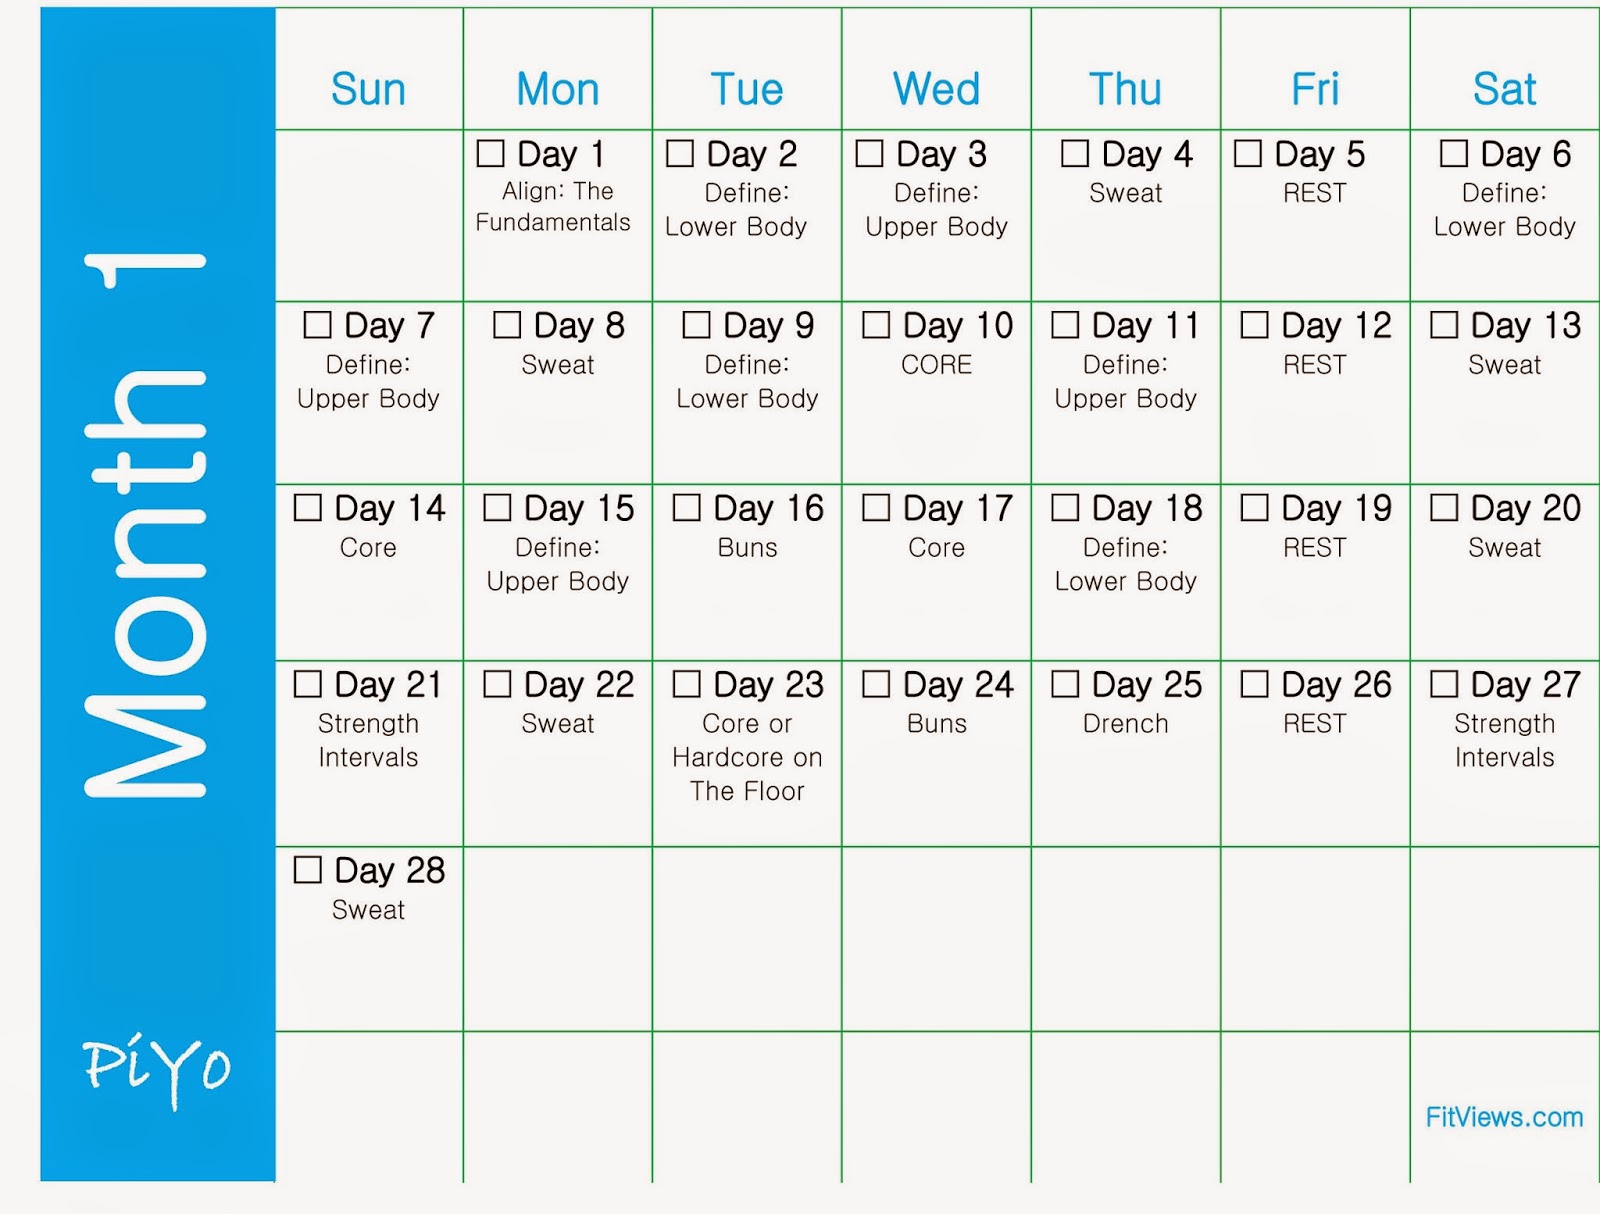 10 Minute Printable piyo workout calendar for Gym